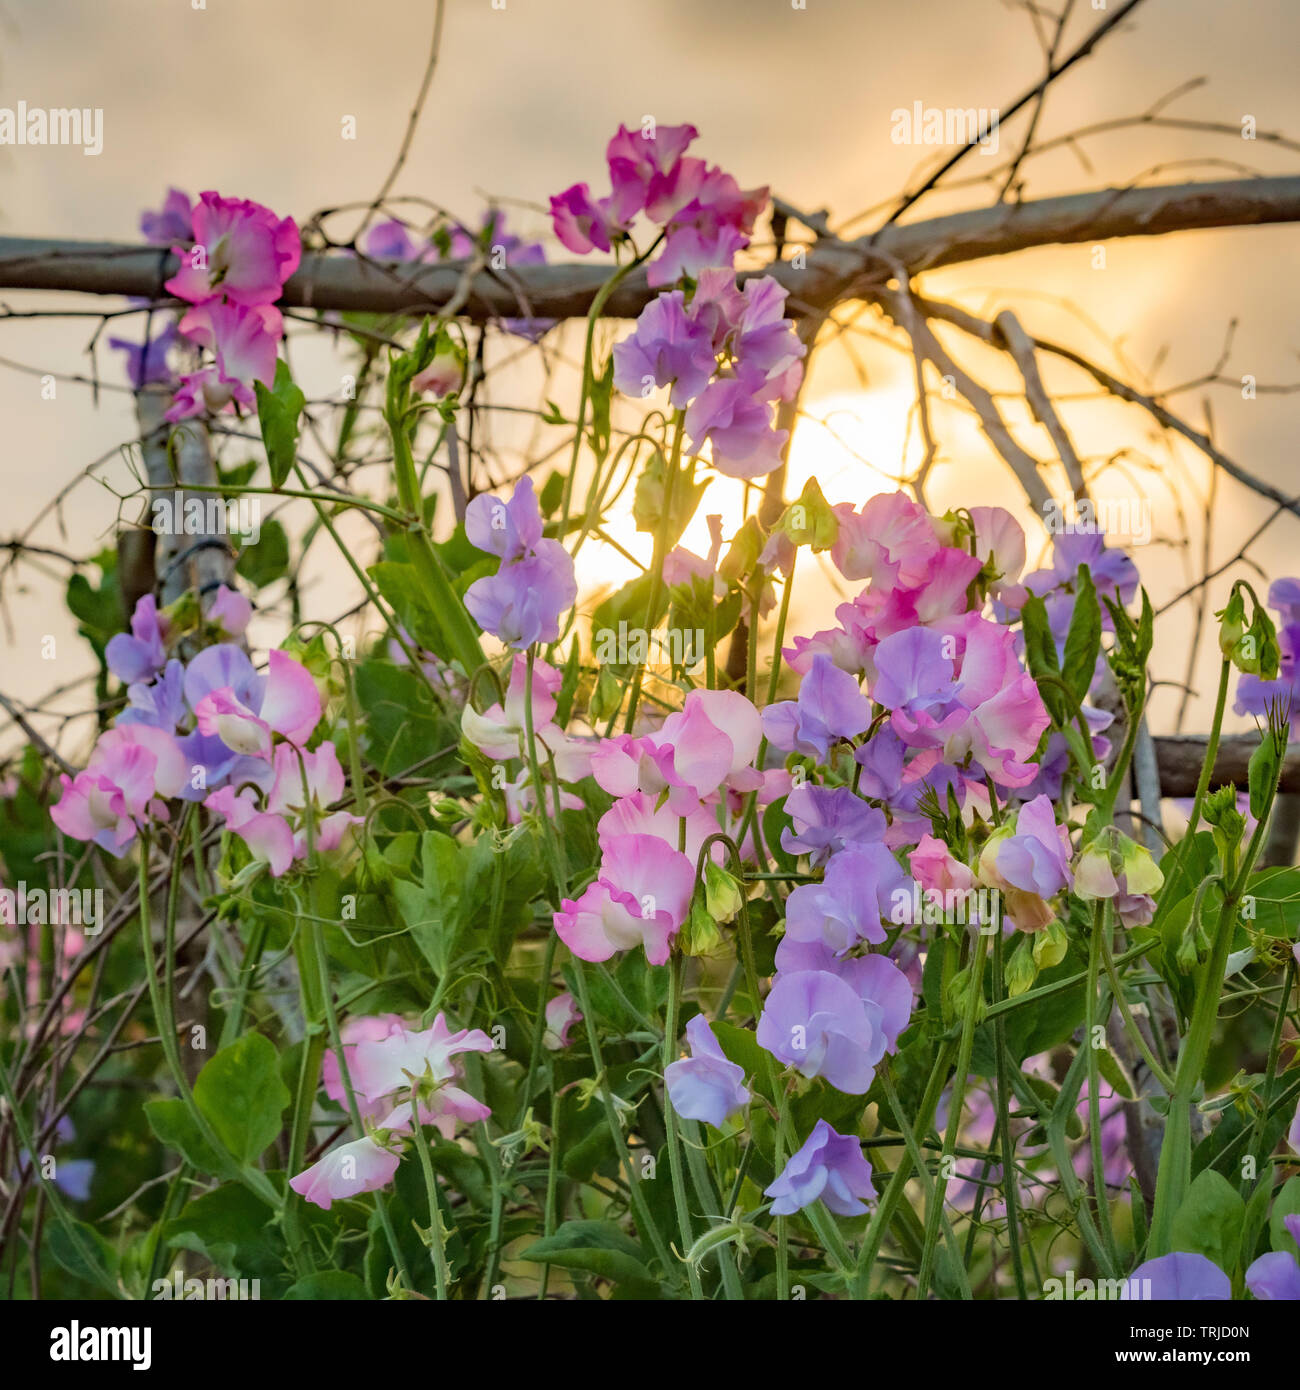 Sweet pea plants flowering at sunset or sunrise Stock Photo